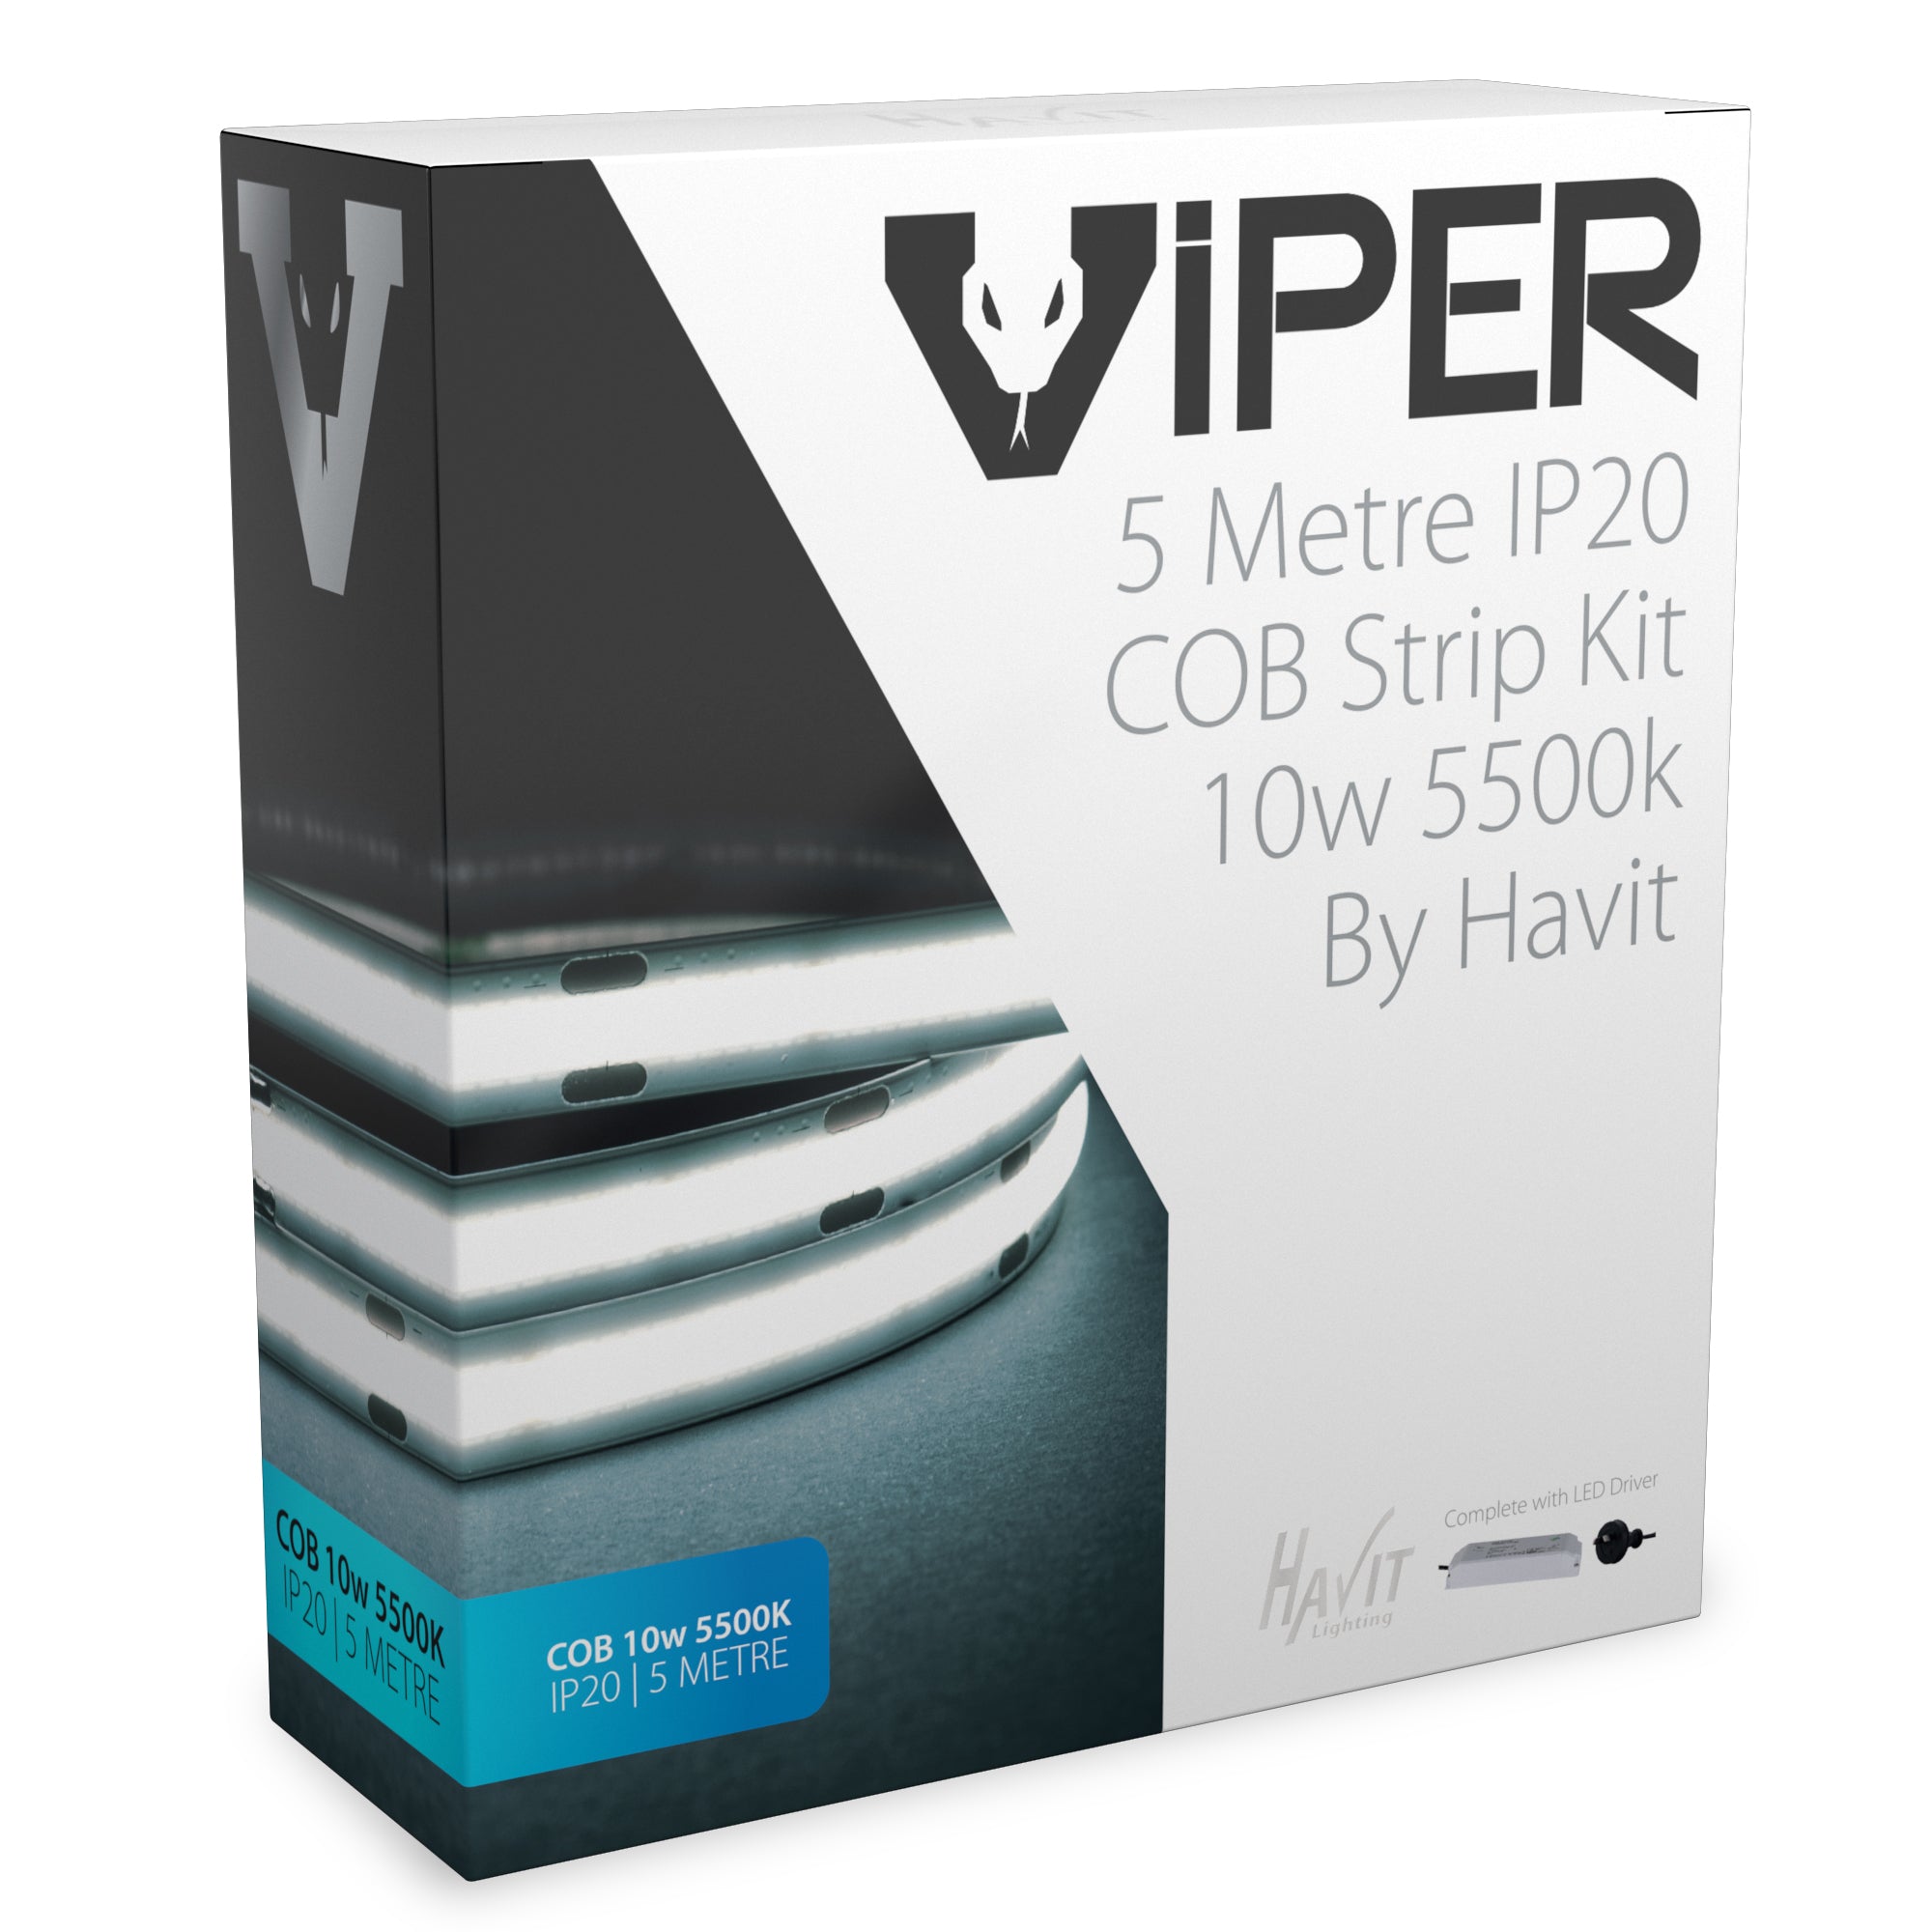 VPR9764IP20-512-5M - COB VIPER 10w 5m LED Strip kit 5500k